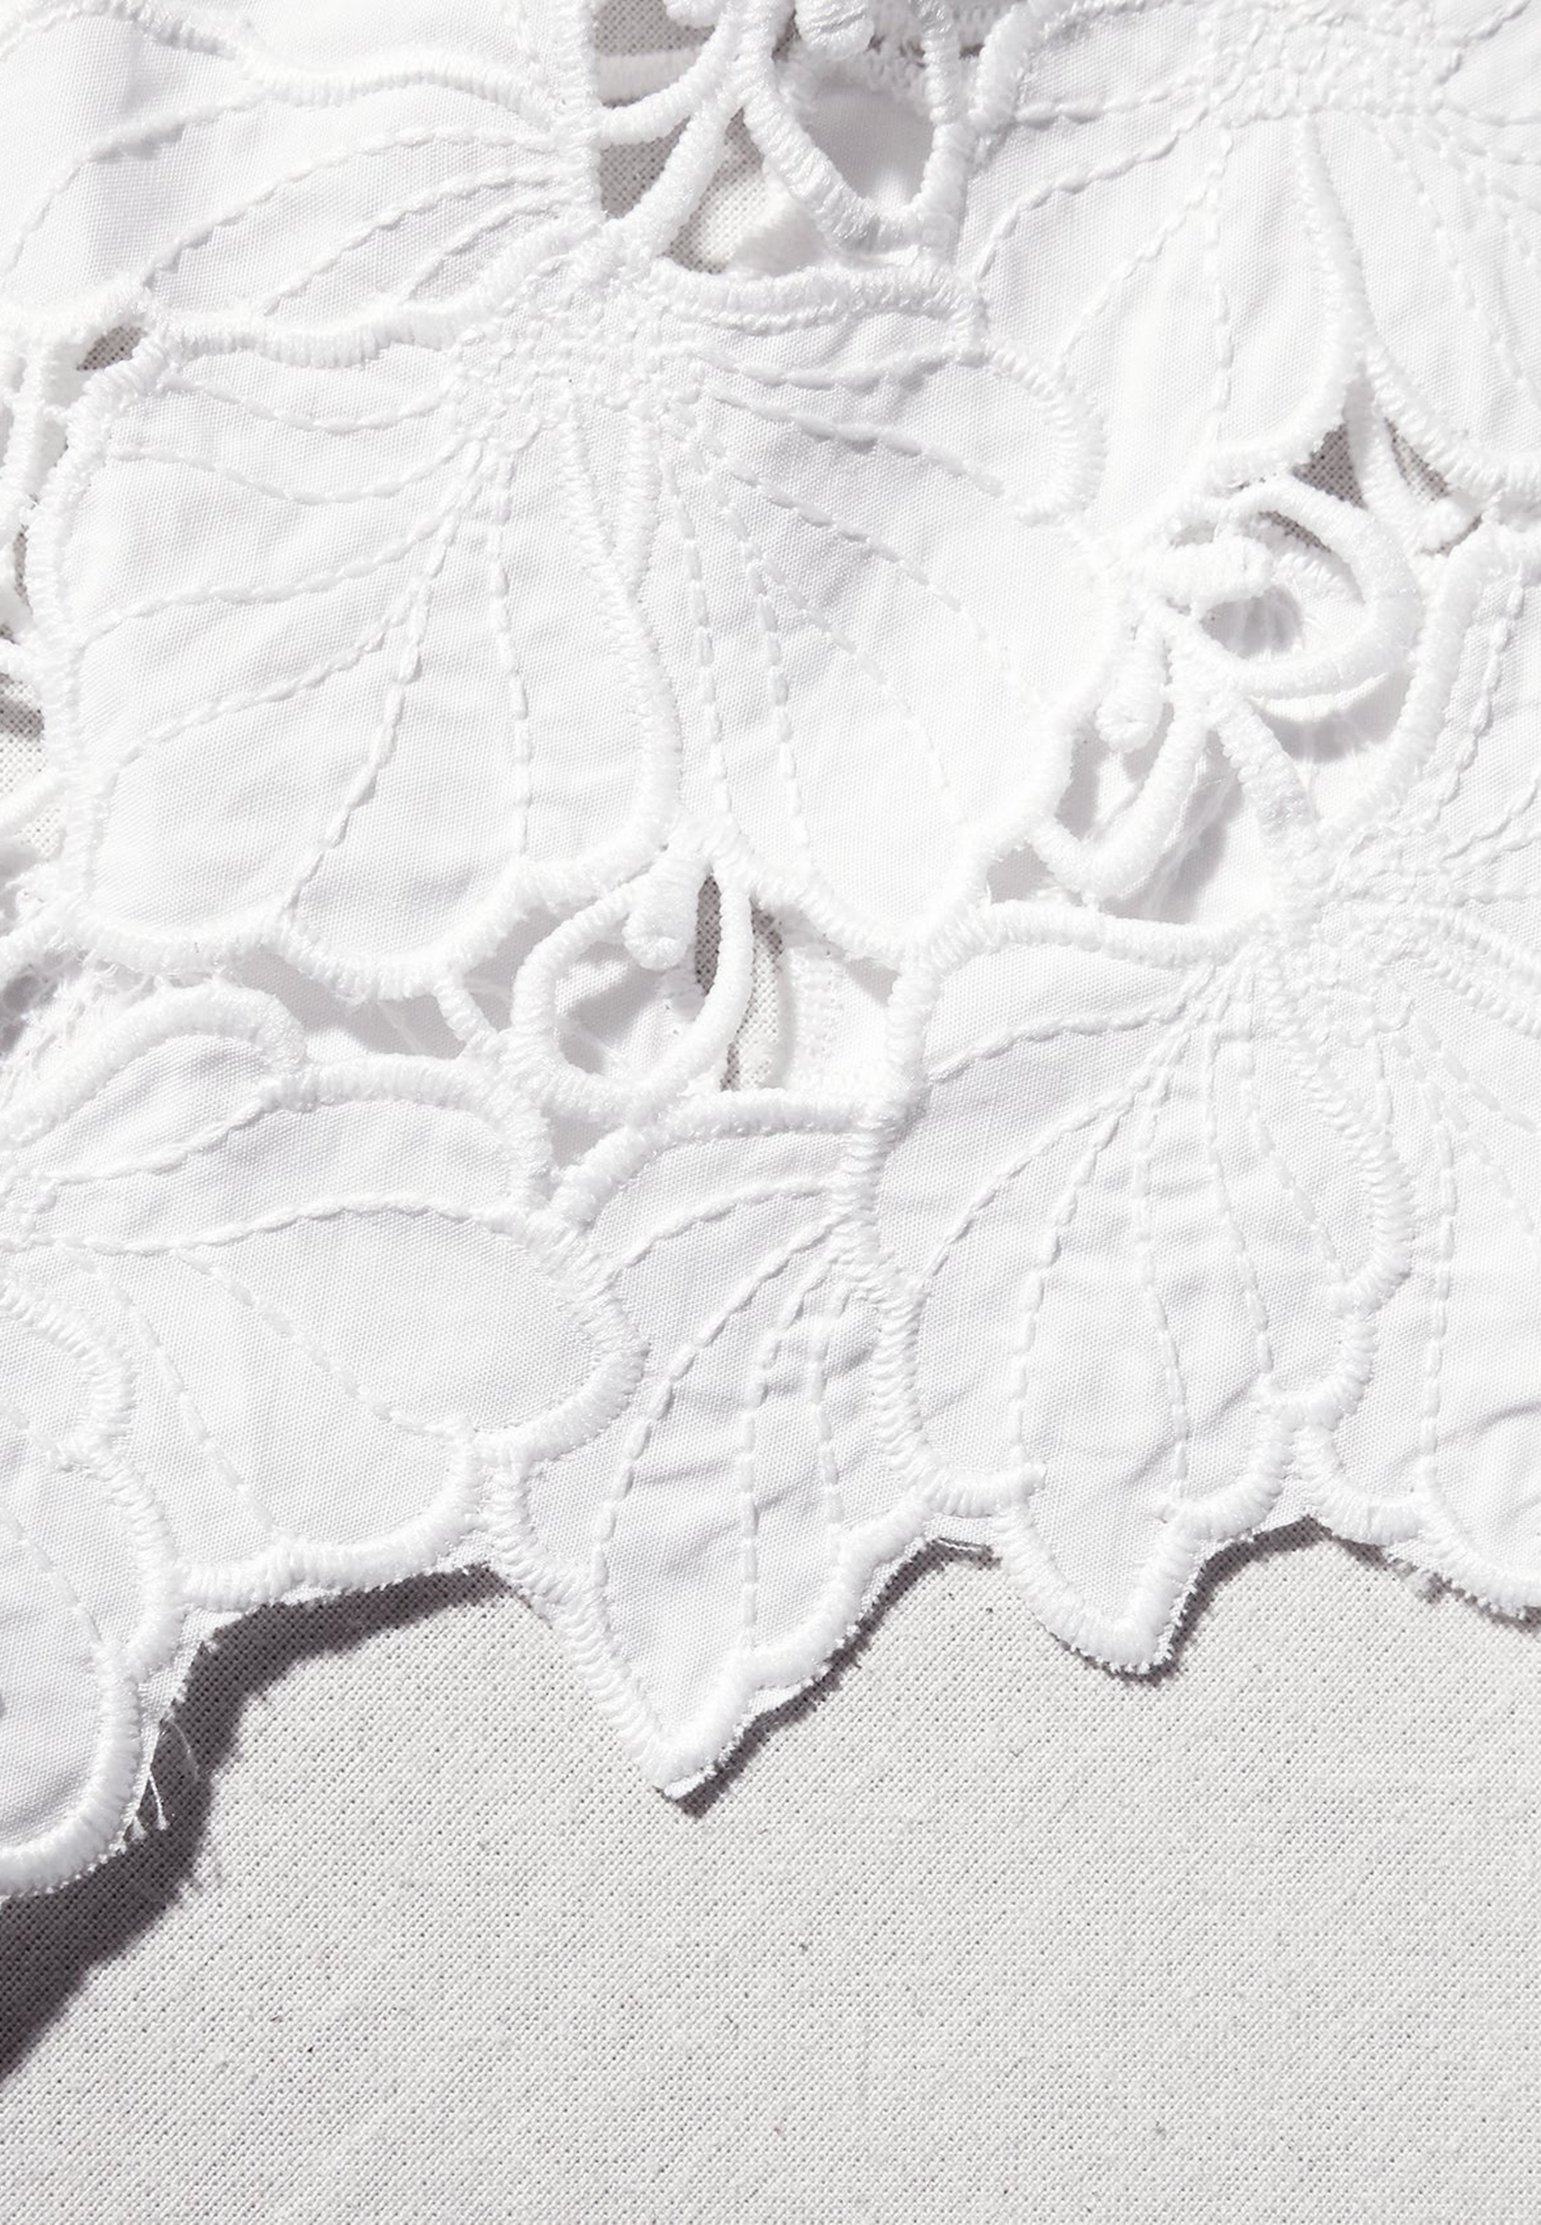 Blouse SELF-PORTRAIT Color: white (Code: 1776) in online store Allure